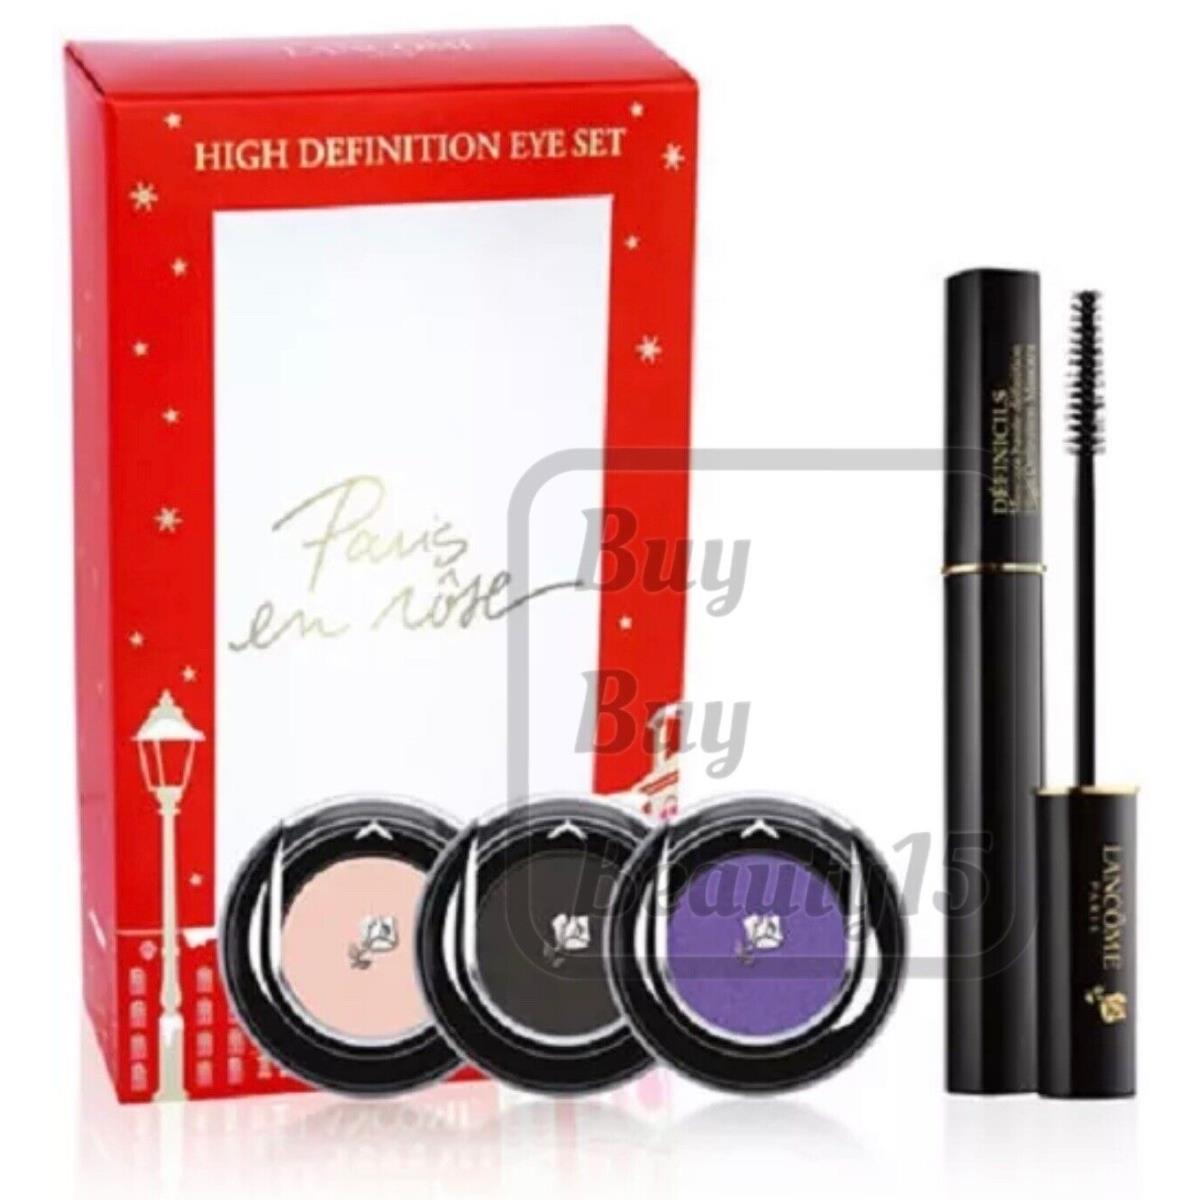 Lancome 4 Piece High Definition Eye Makeup Set Limited Edition